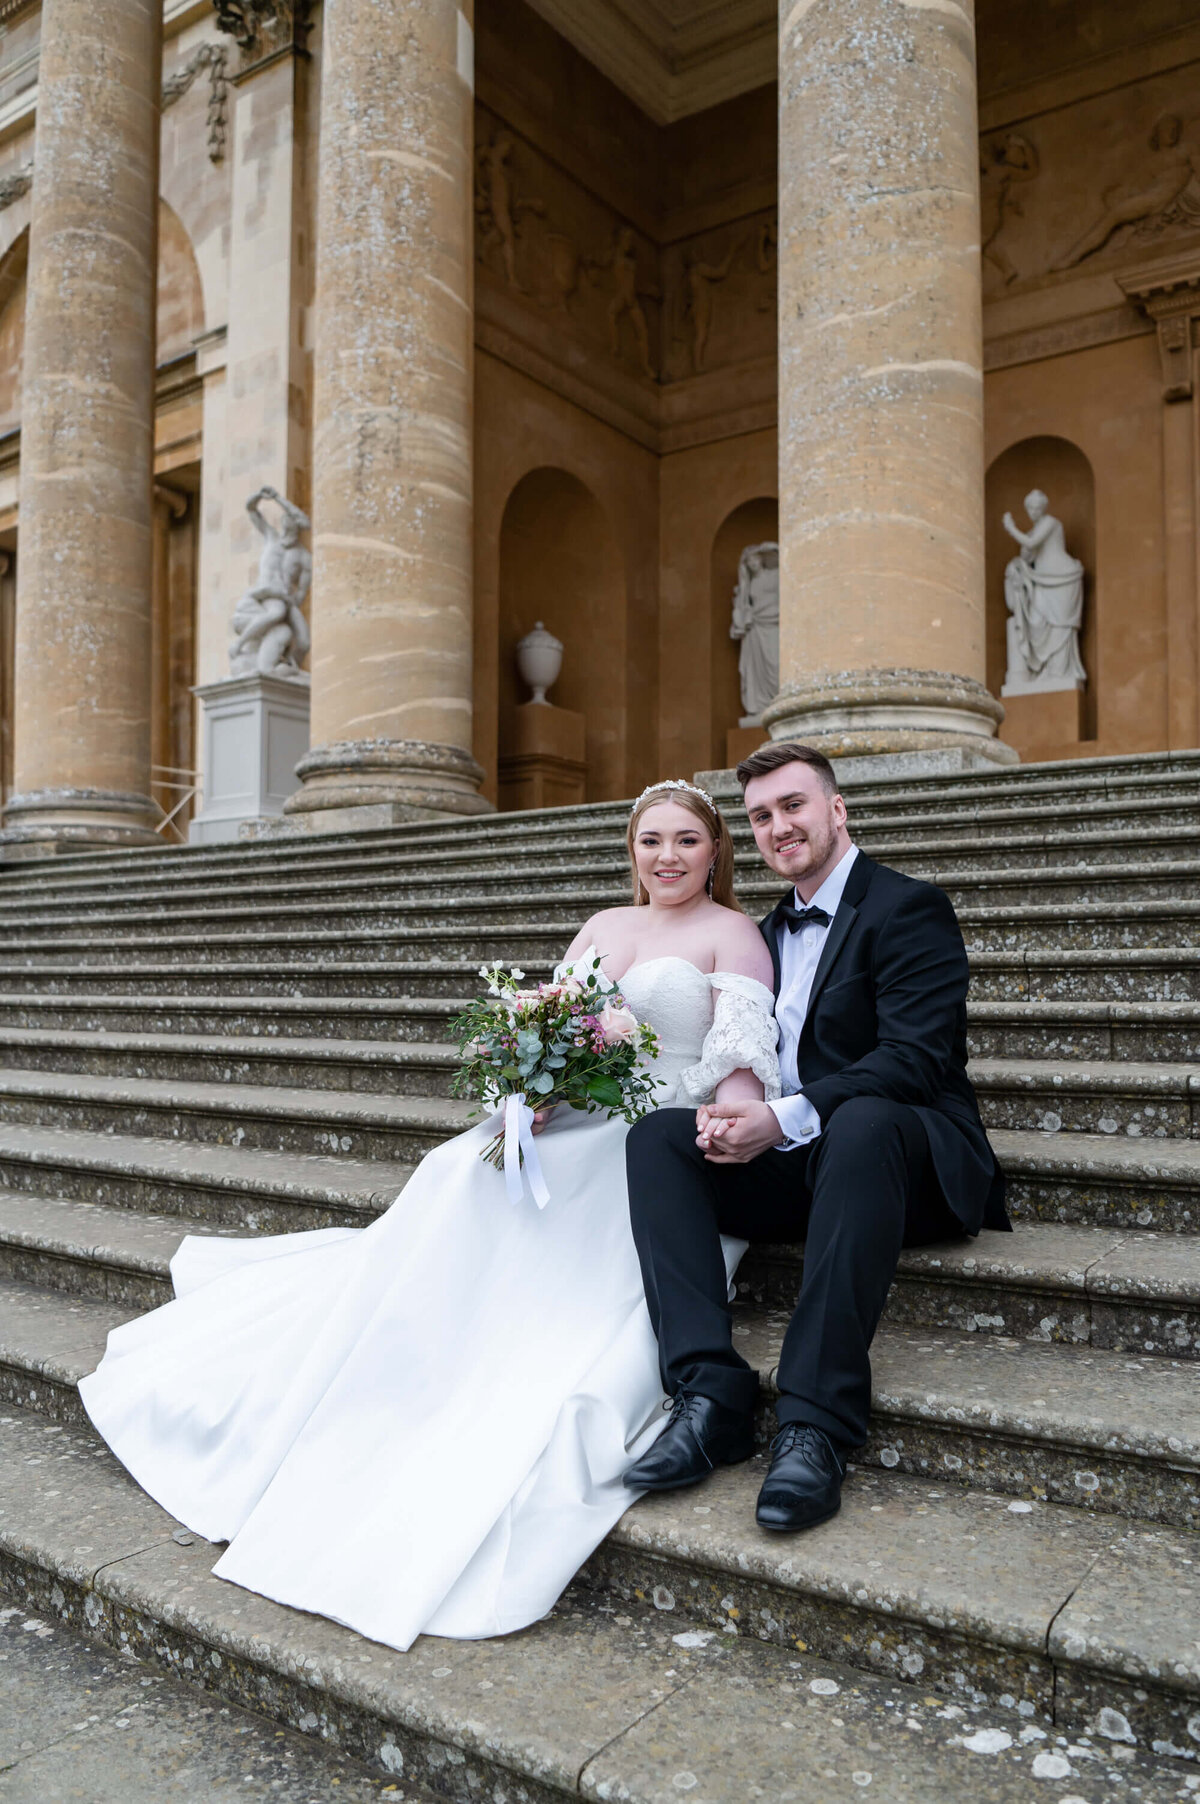 Stowe House Wedding Photographer - Buckinghamshire UK Wedding Photographer - Chloe Bolam - Luxury UK Wedding Venue -53